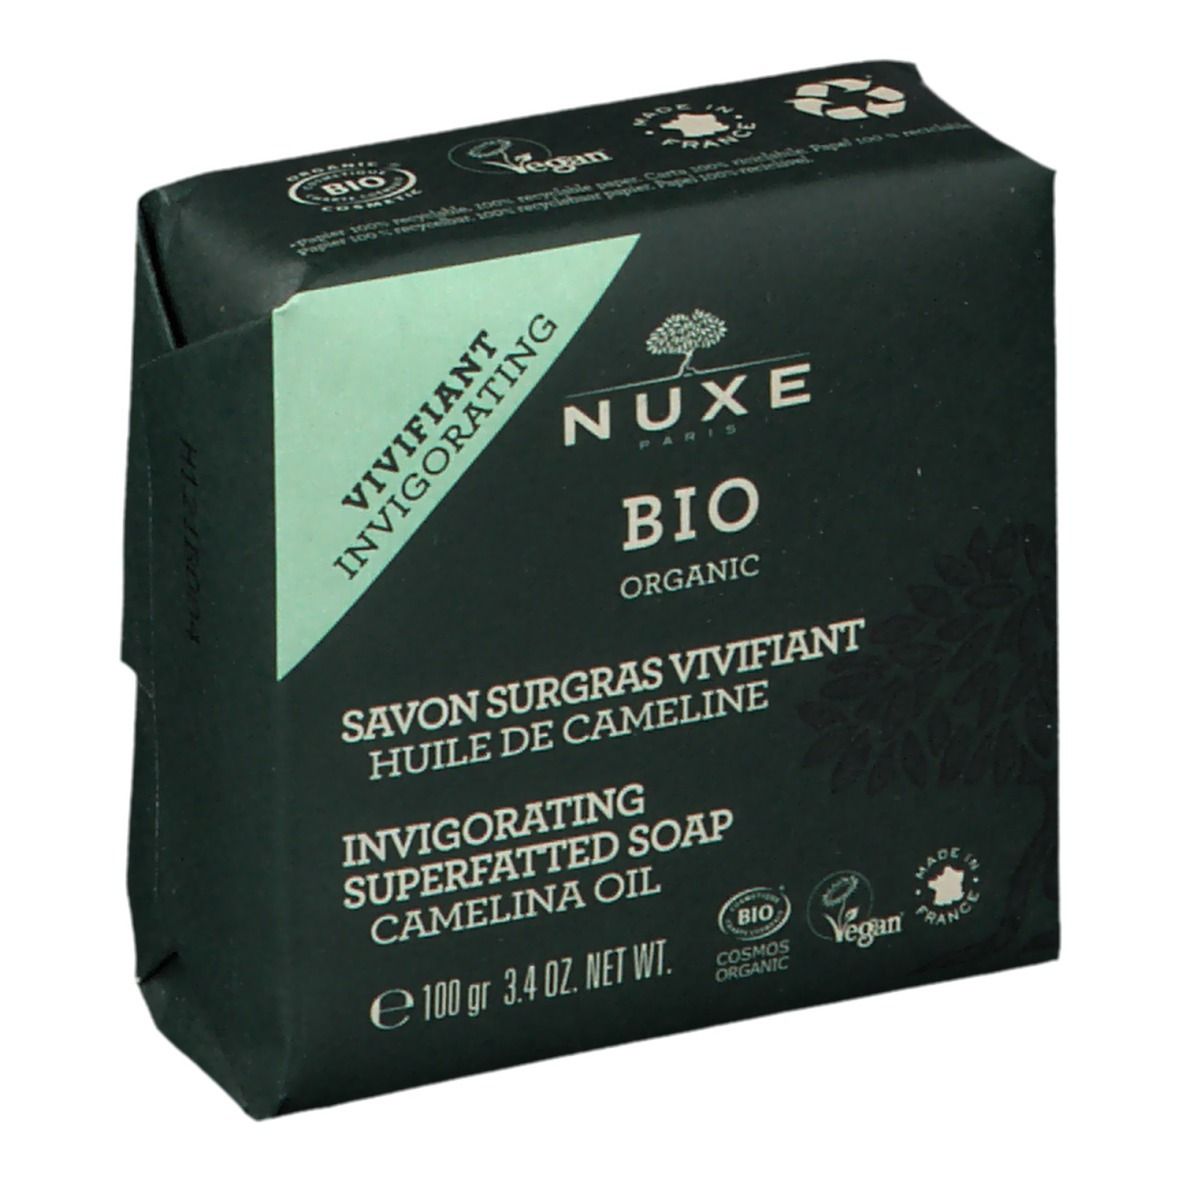 Nuxe Bio Organic Savon Surgras Vivifiant